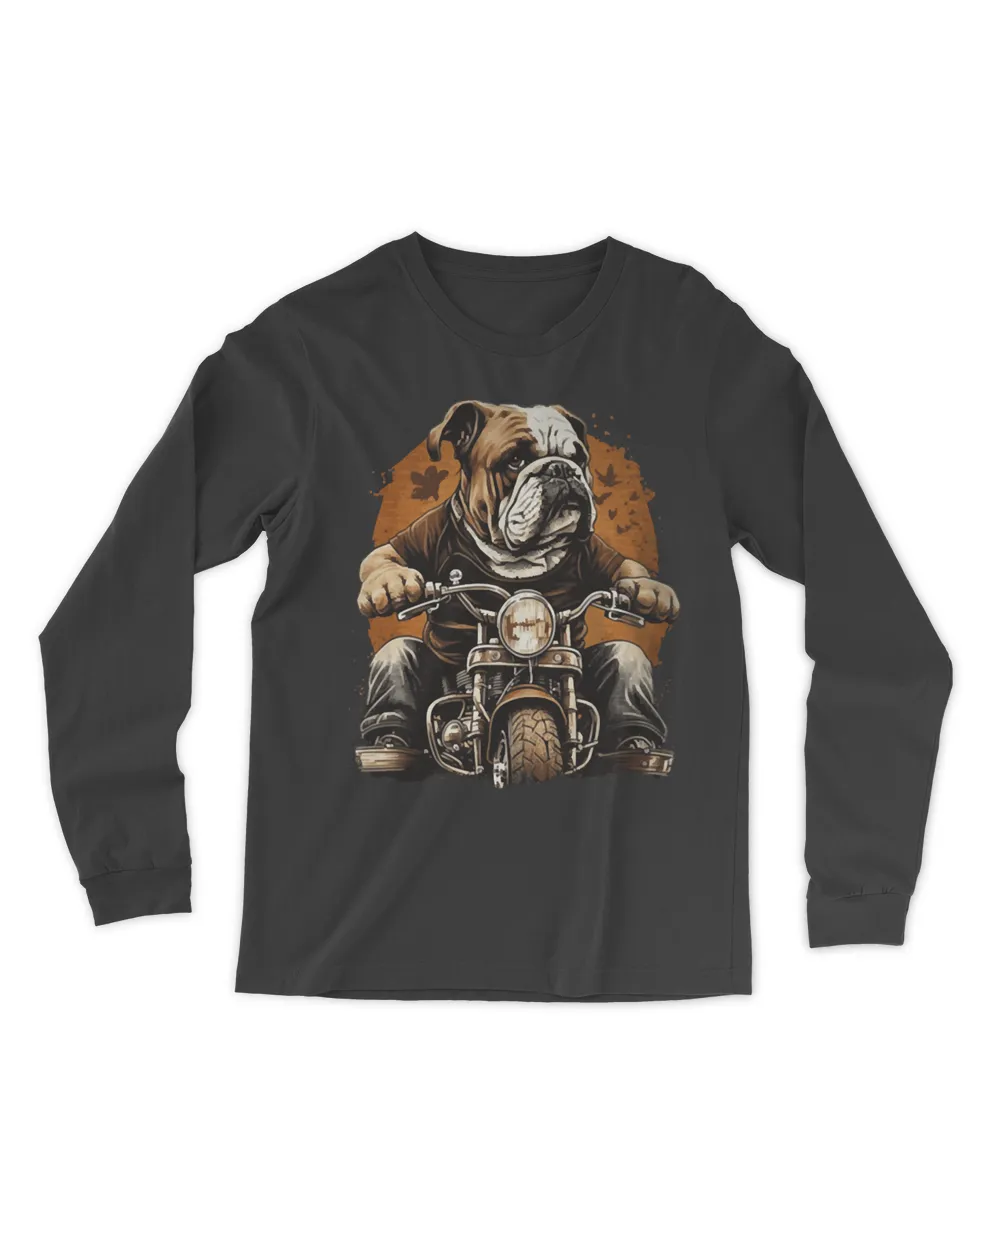 English Bulldog Riding Motorcycle Cool Biker Dog T-Shirt